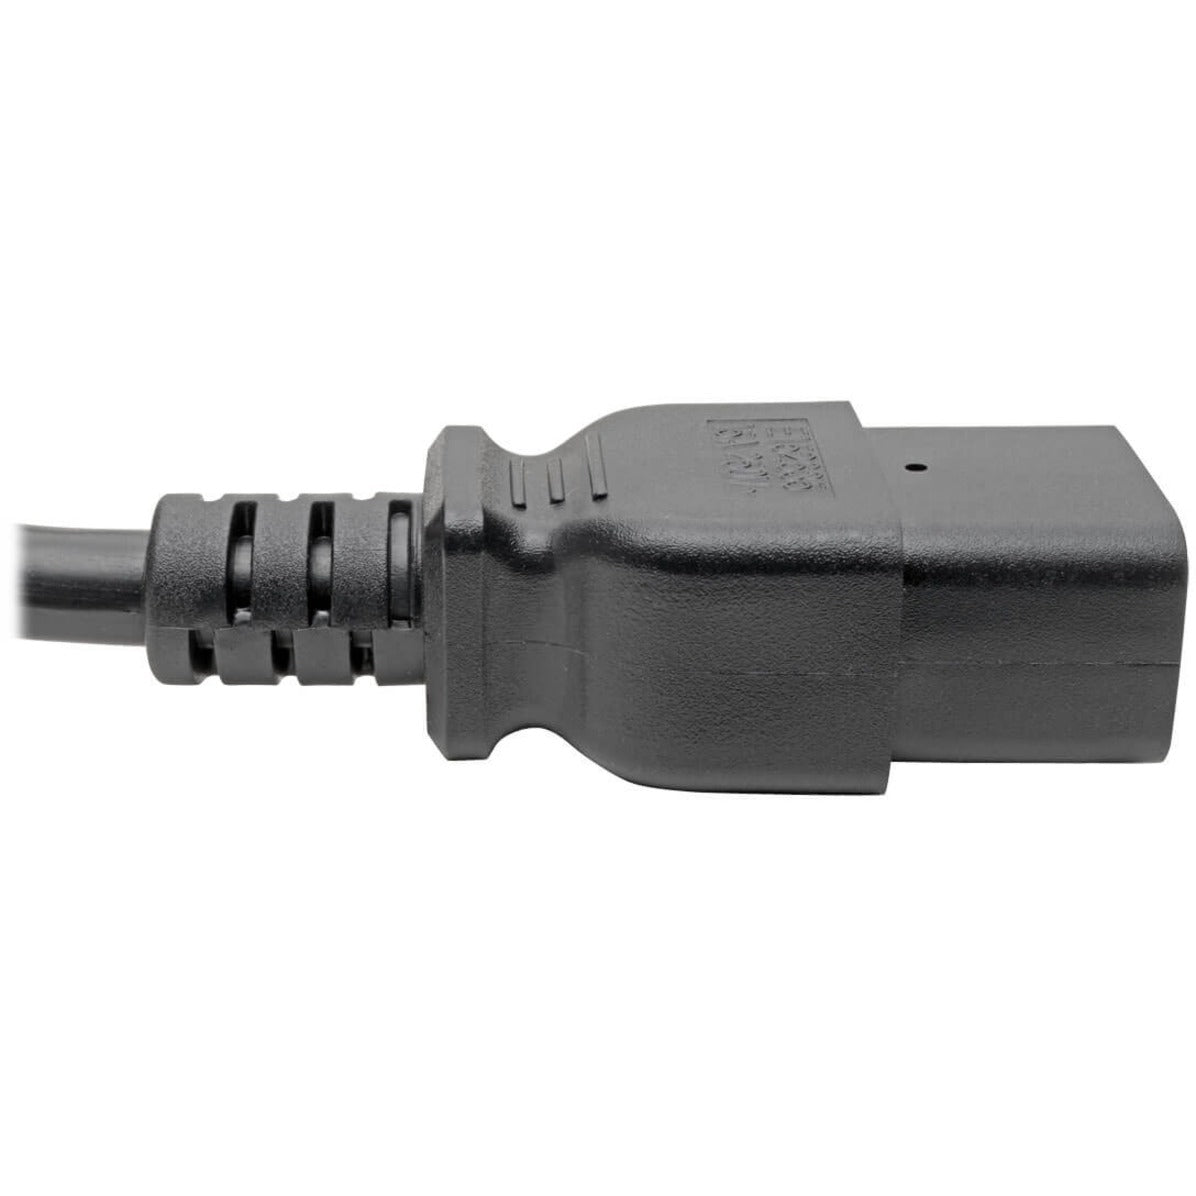 Tripp Lite P047-002 Power Interconnect Cable, 2 ft, 15A, 250V AC, Black